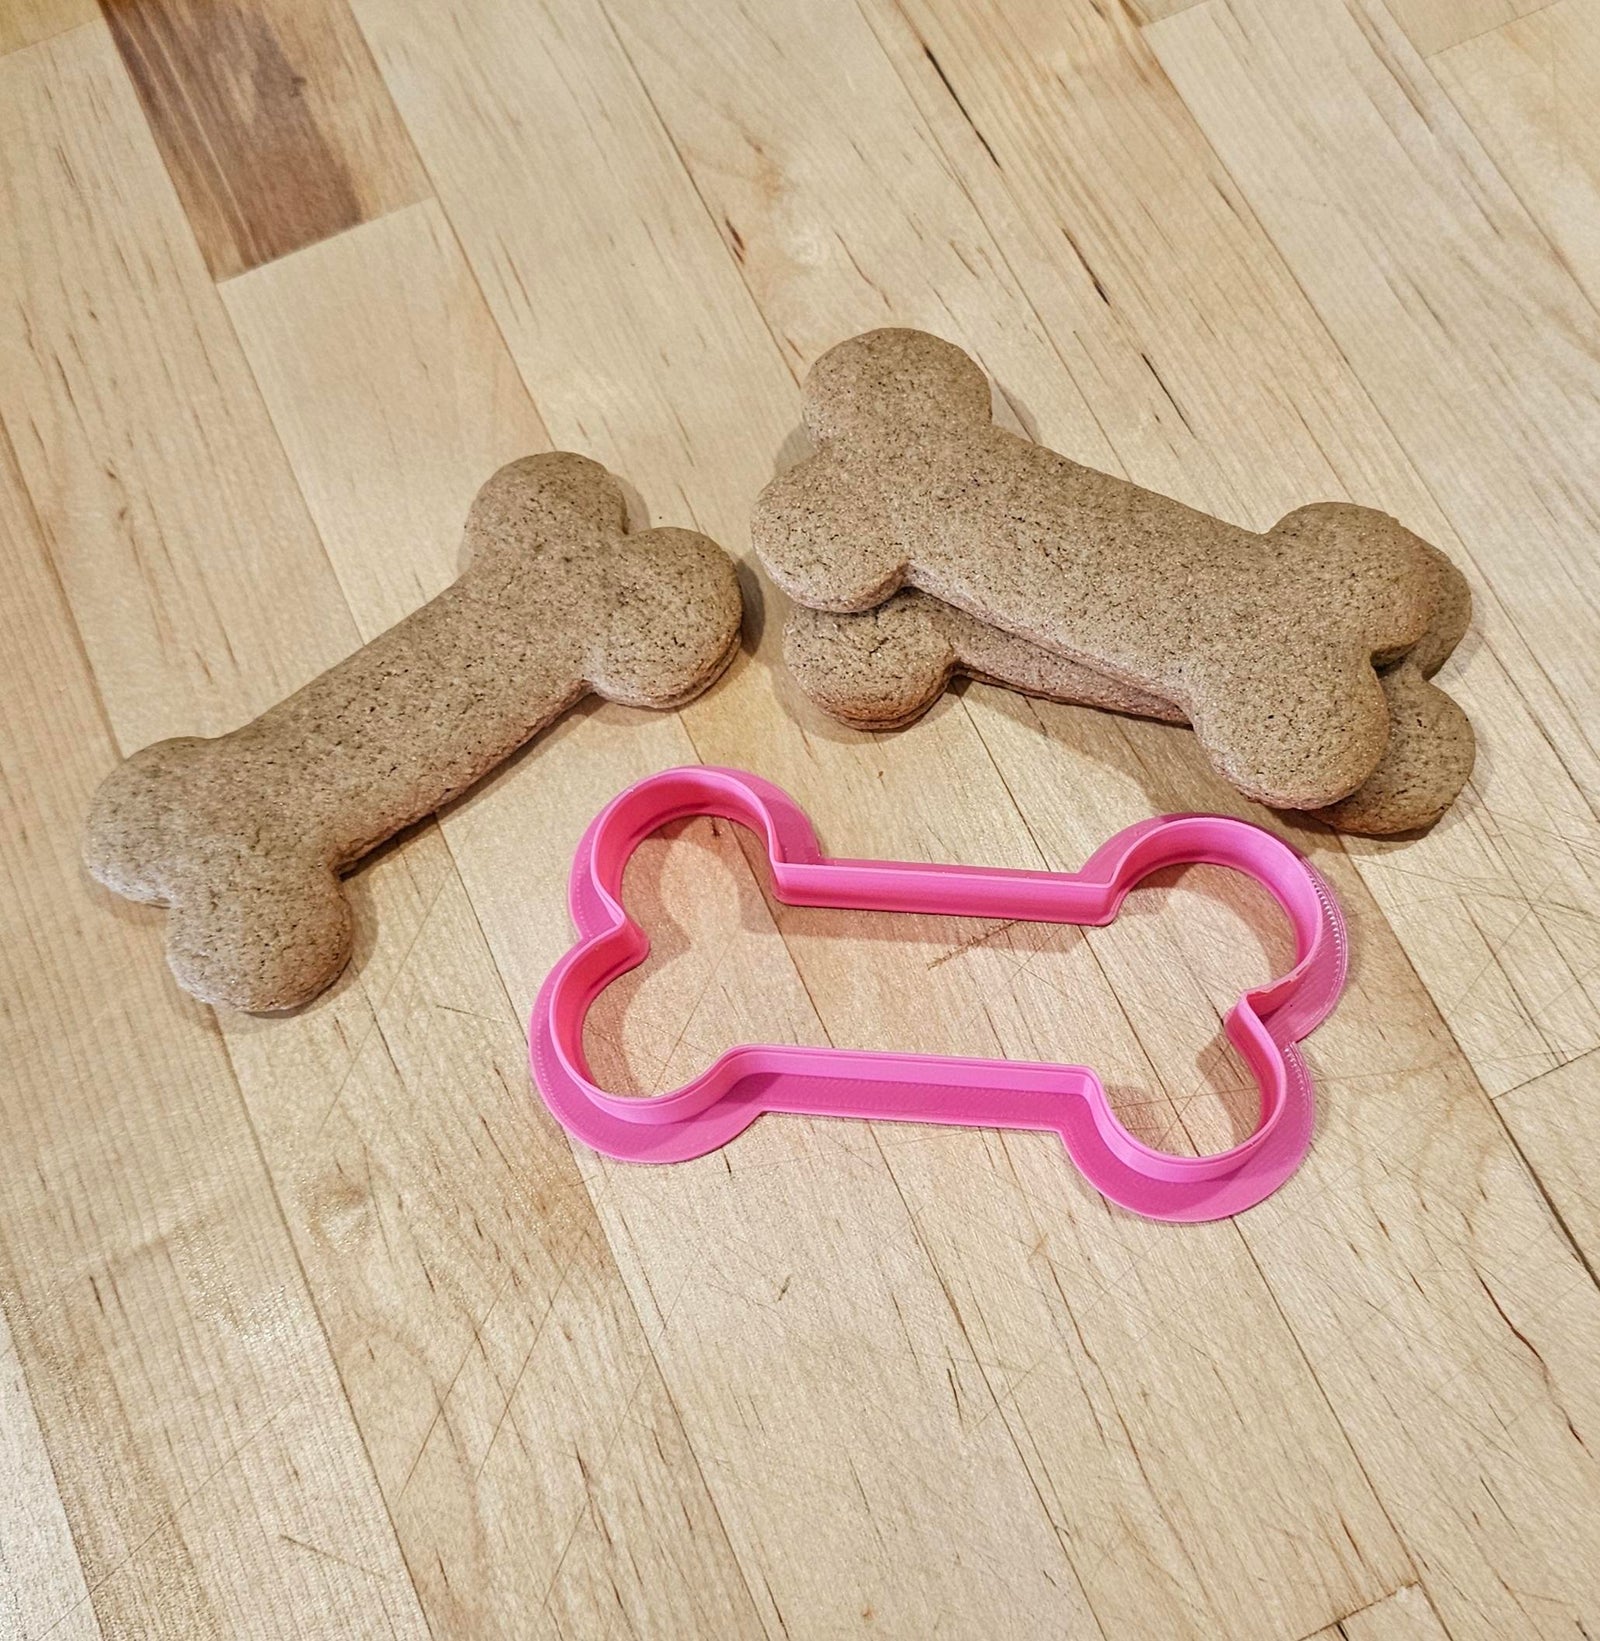 6 Piece Dog Cookie Cutter Set, Cartoon Dog Bone, Paw Print Animal Cookie  Mould